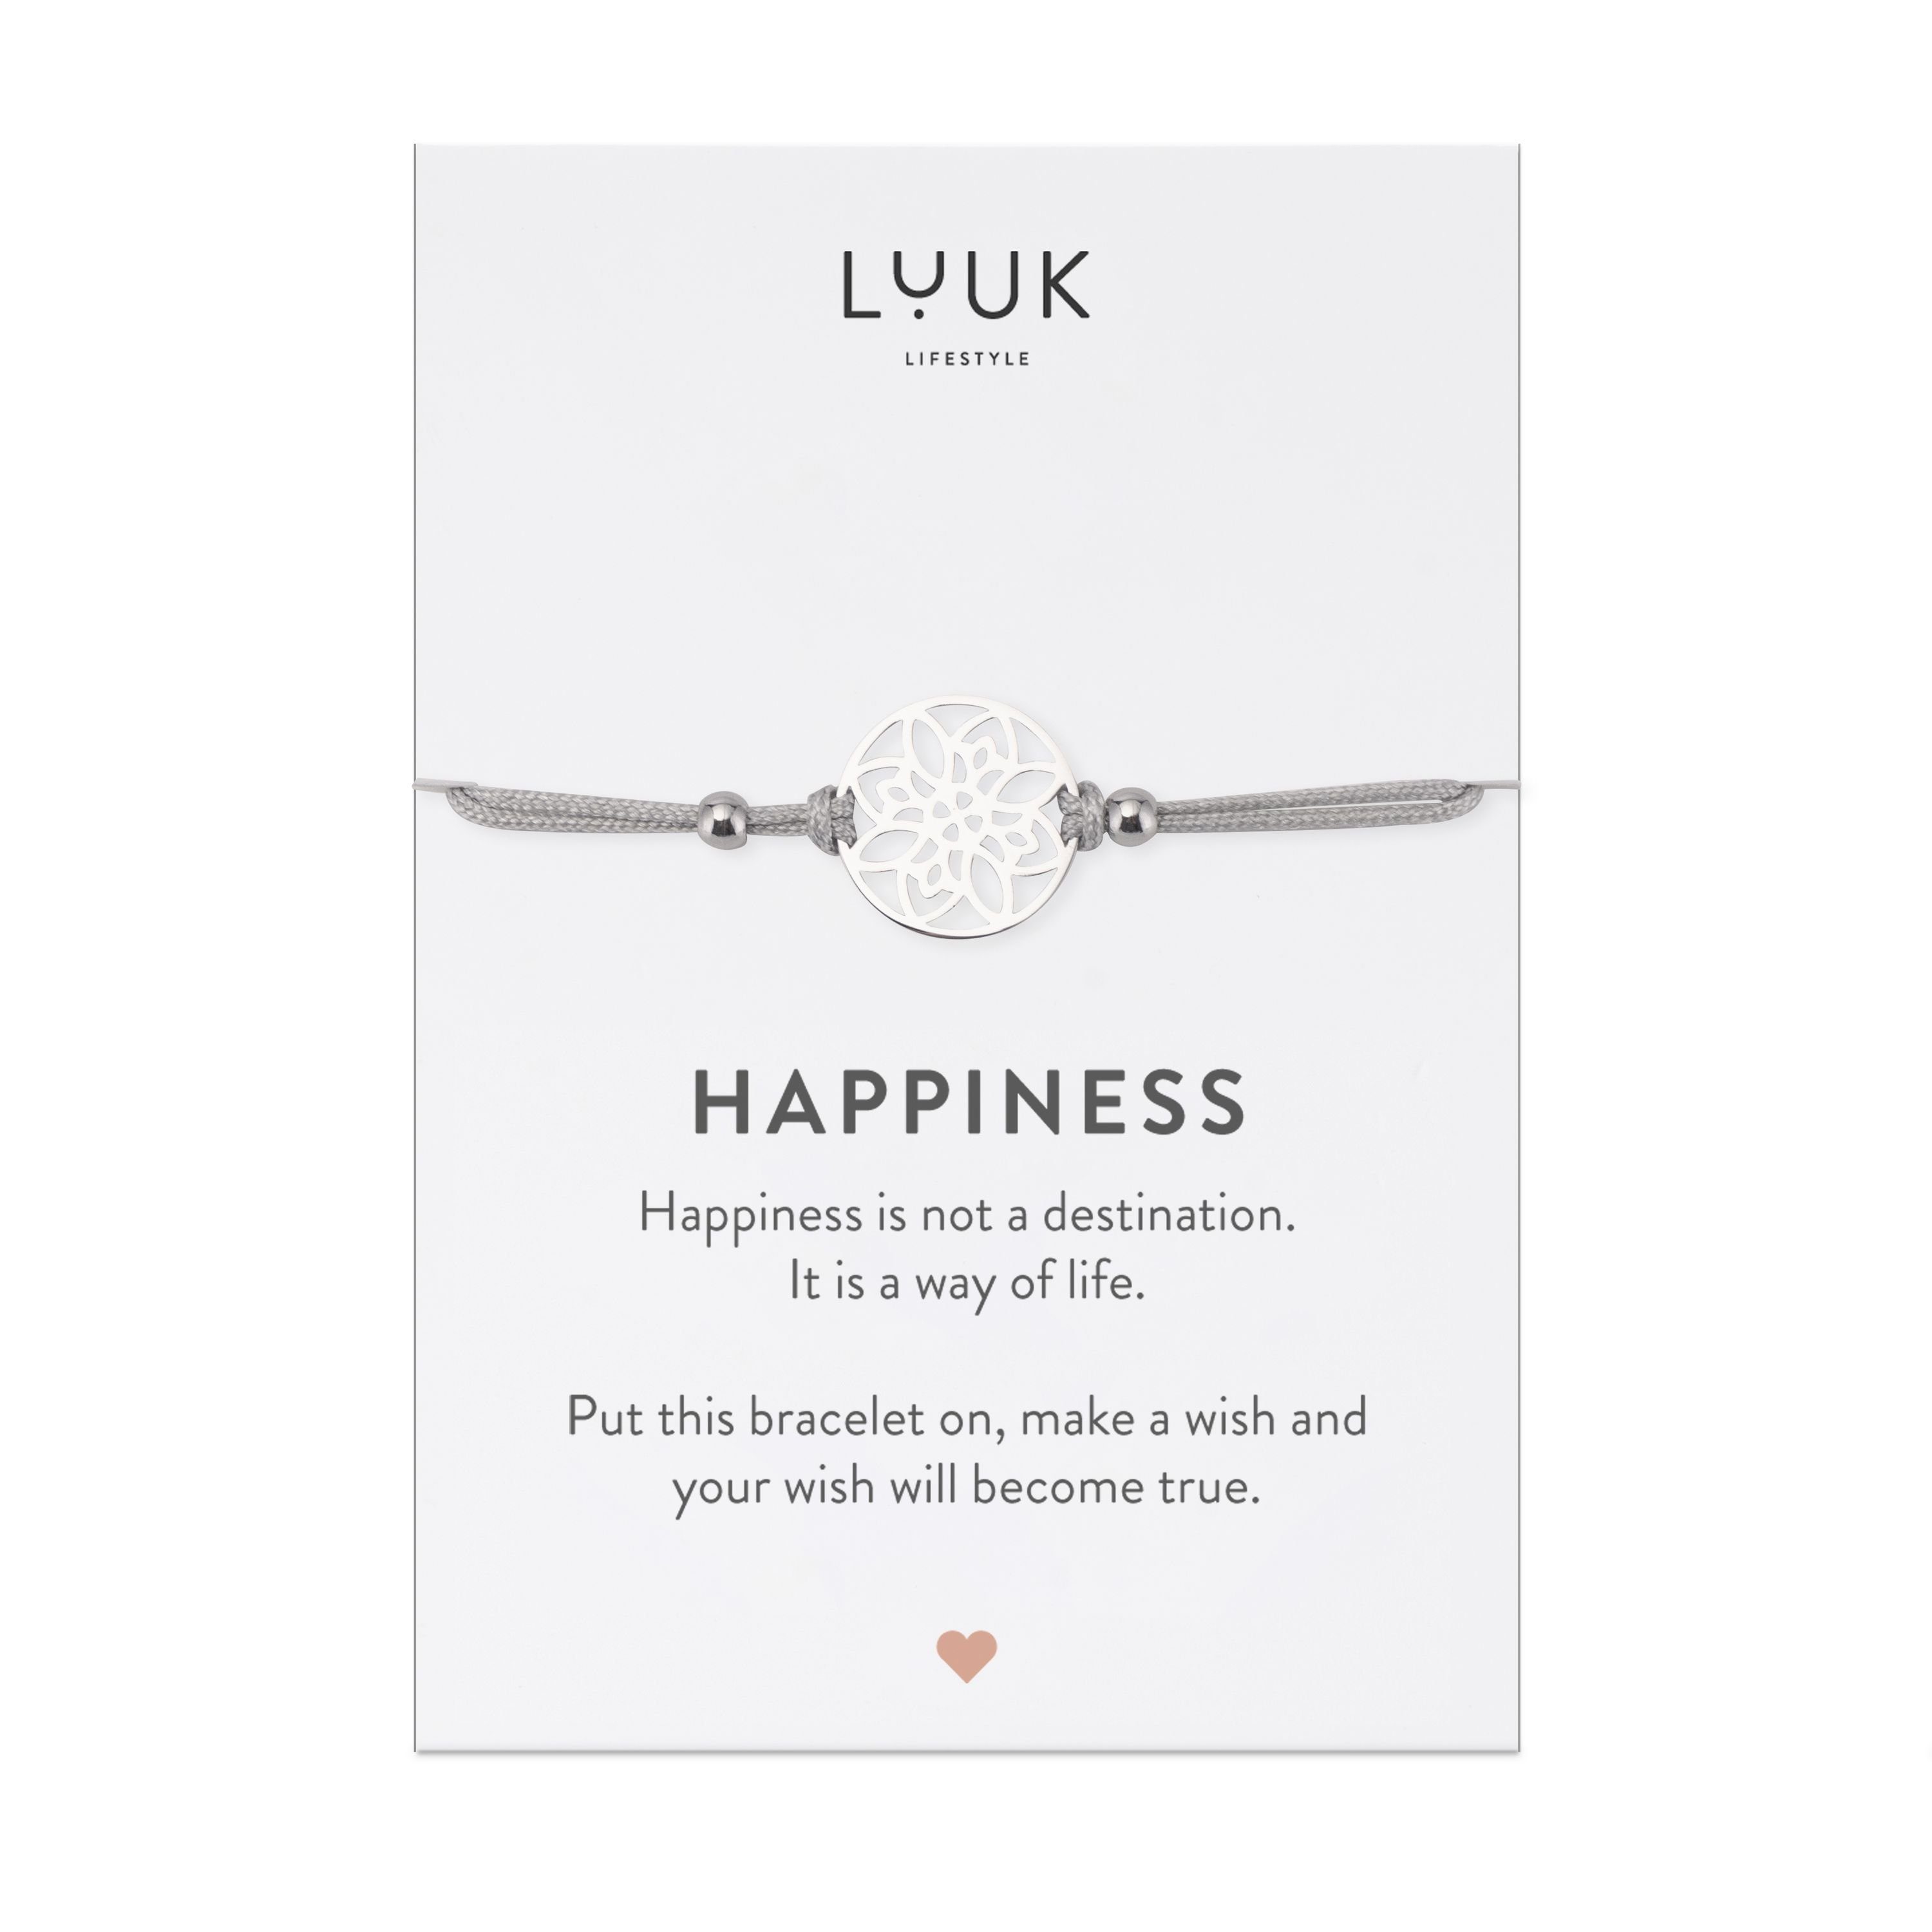 LUUK LIFESTYLE Freundschaftsarmband Blume, handmade, mit Happiness Spruchkarte Silber | Armbänder